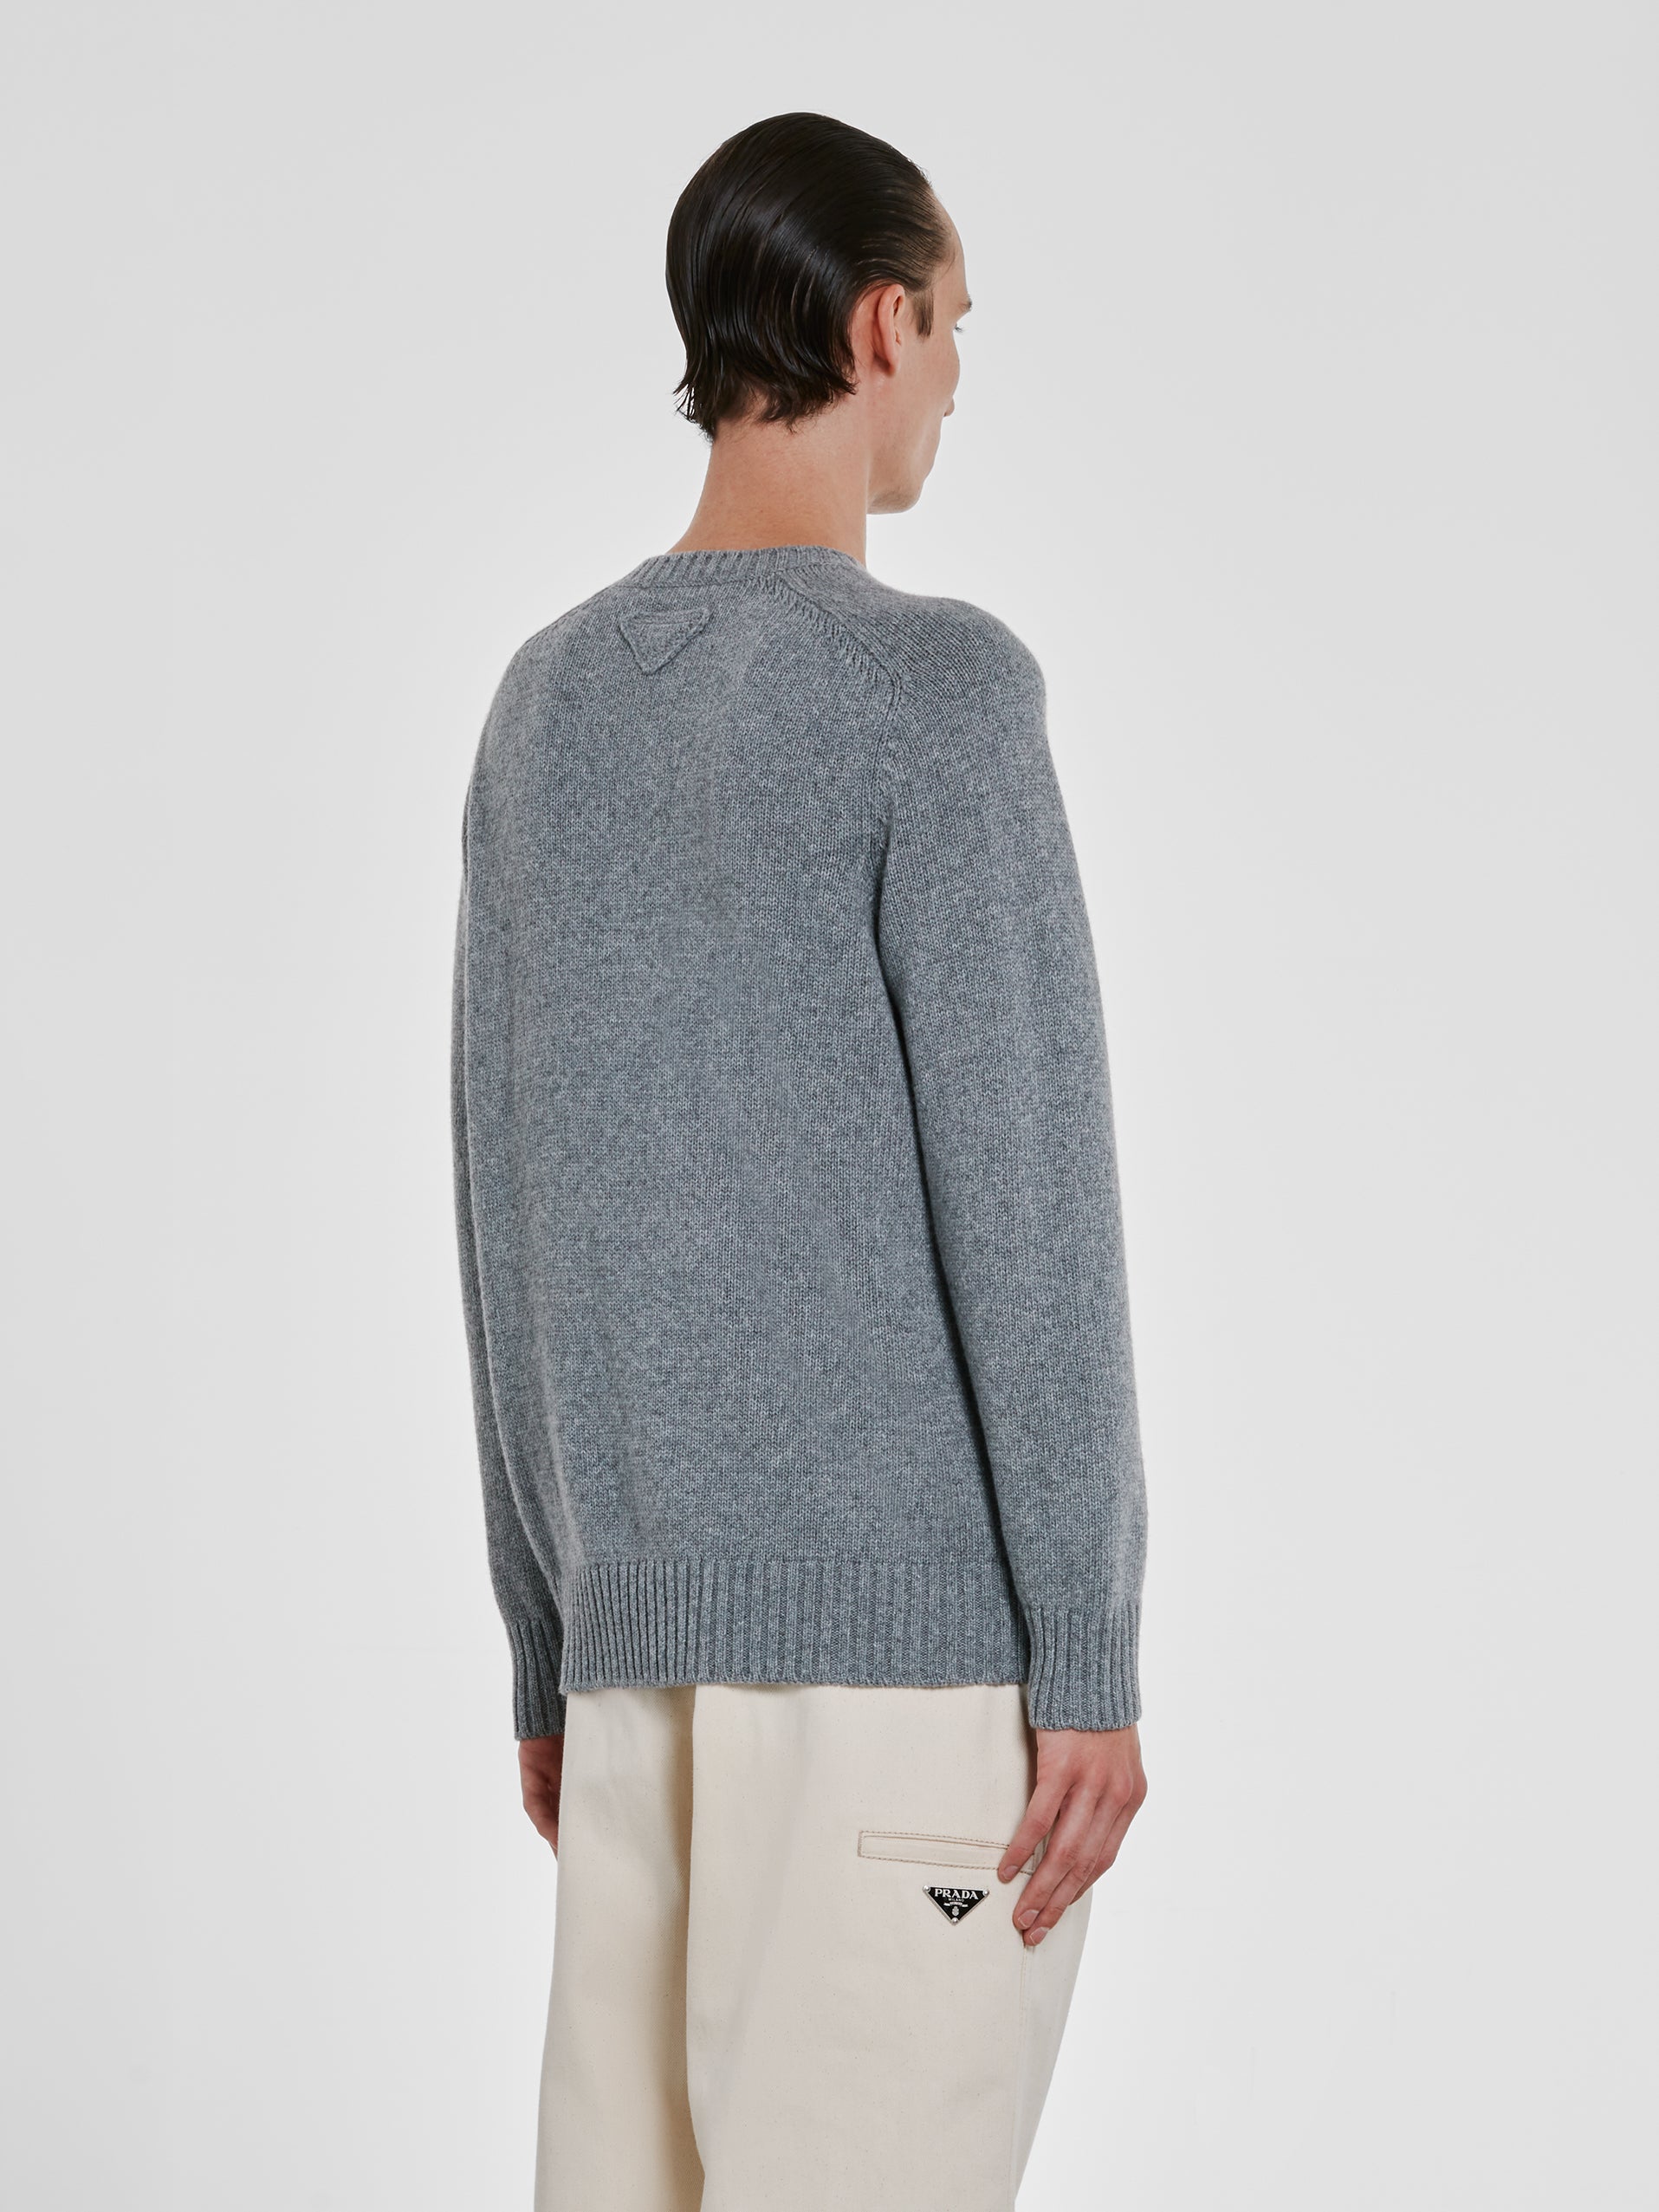 Prada - Men’s Wool and Cashmere Cardigan - (Grey) view 3